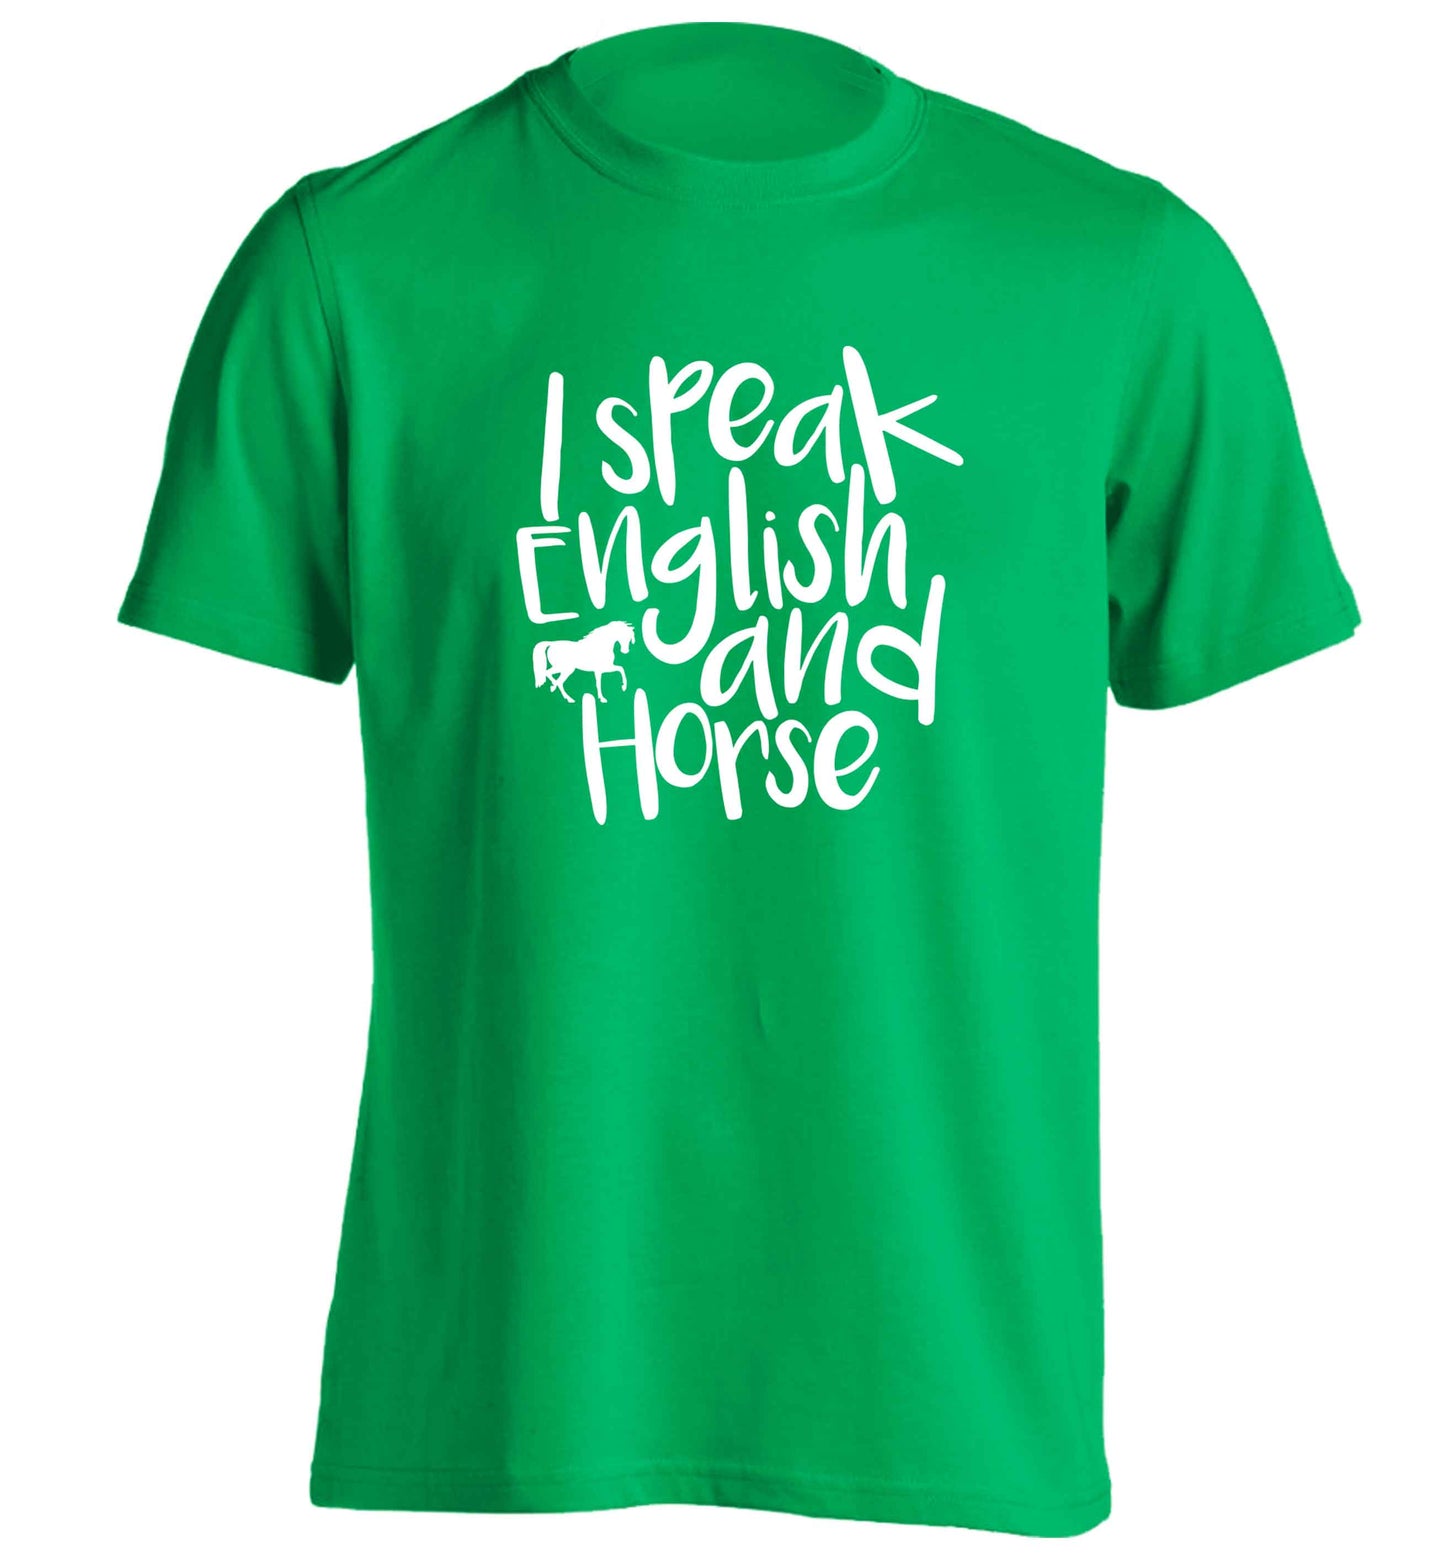 I speak English and horse adults unisex green Tshirt 2XL